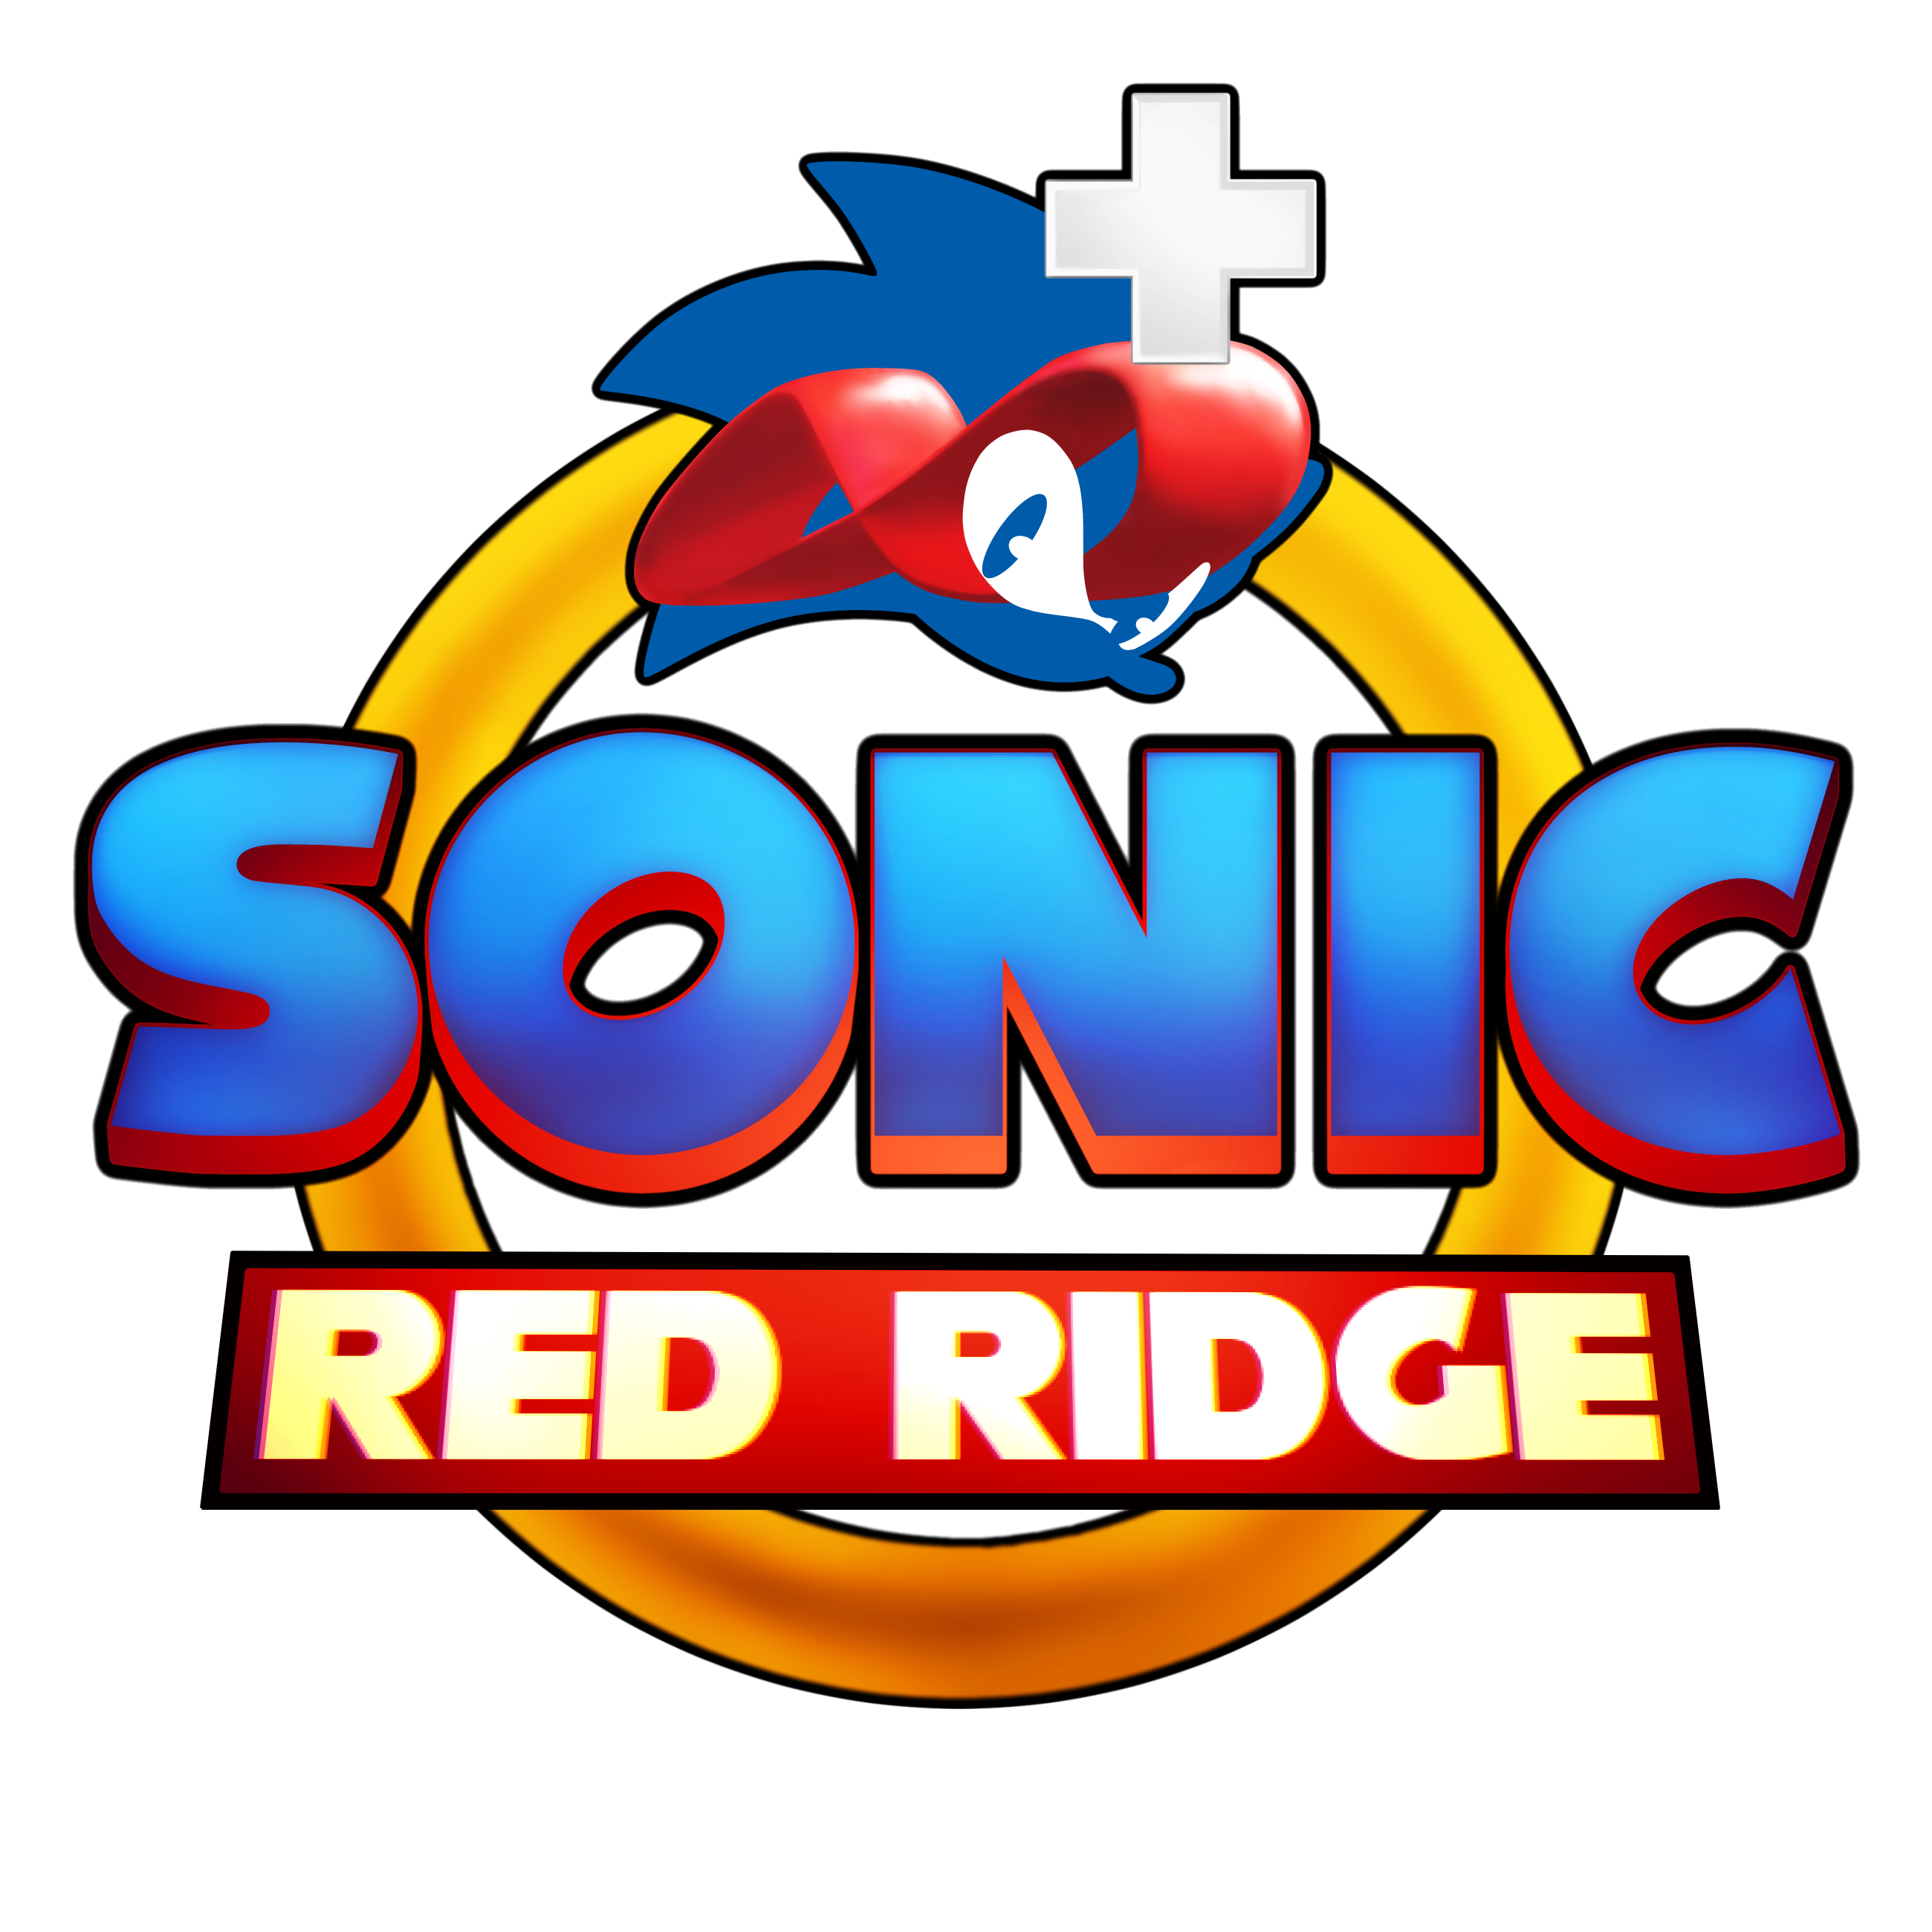 Sonic Red Ridge by Tigersonalex - Game Jolt